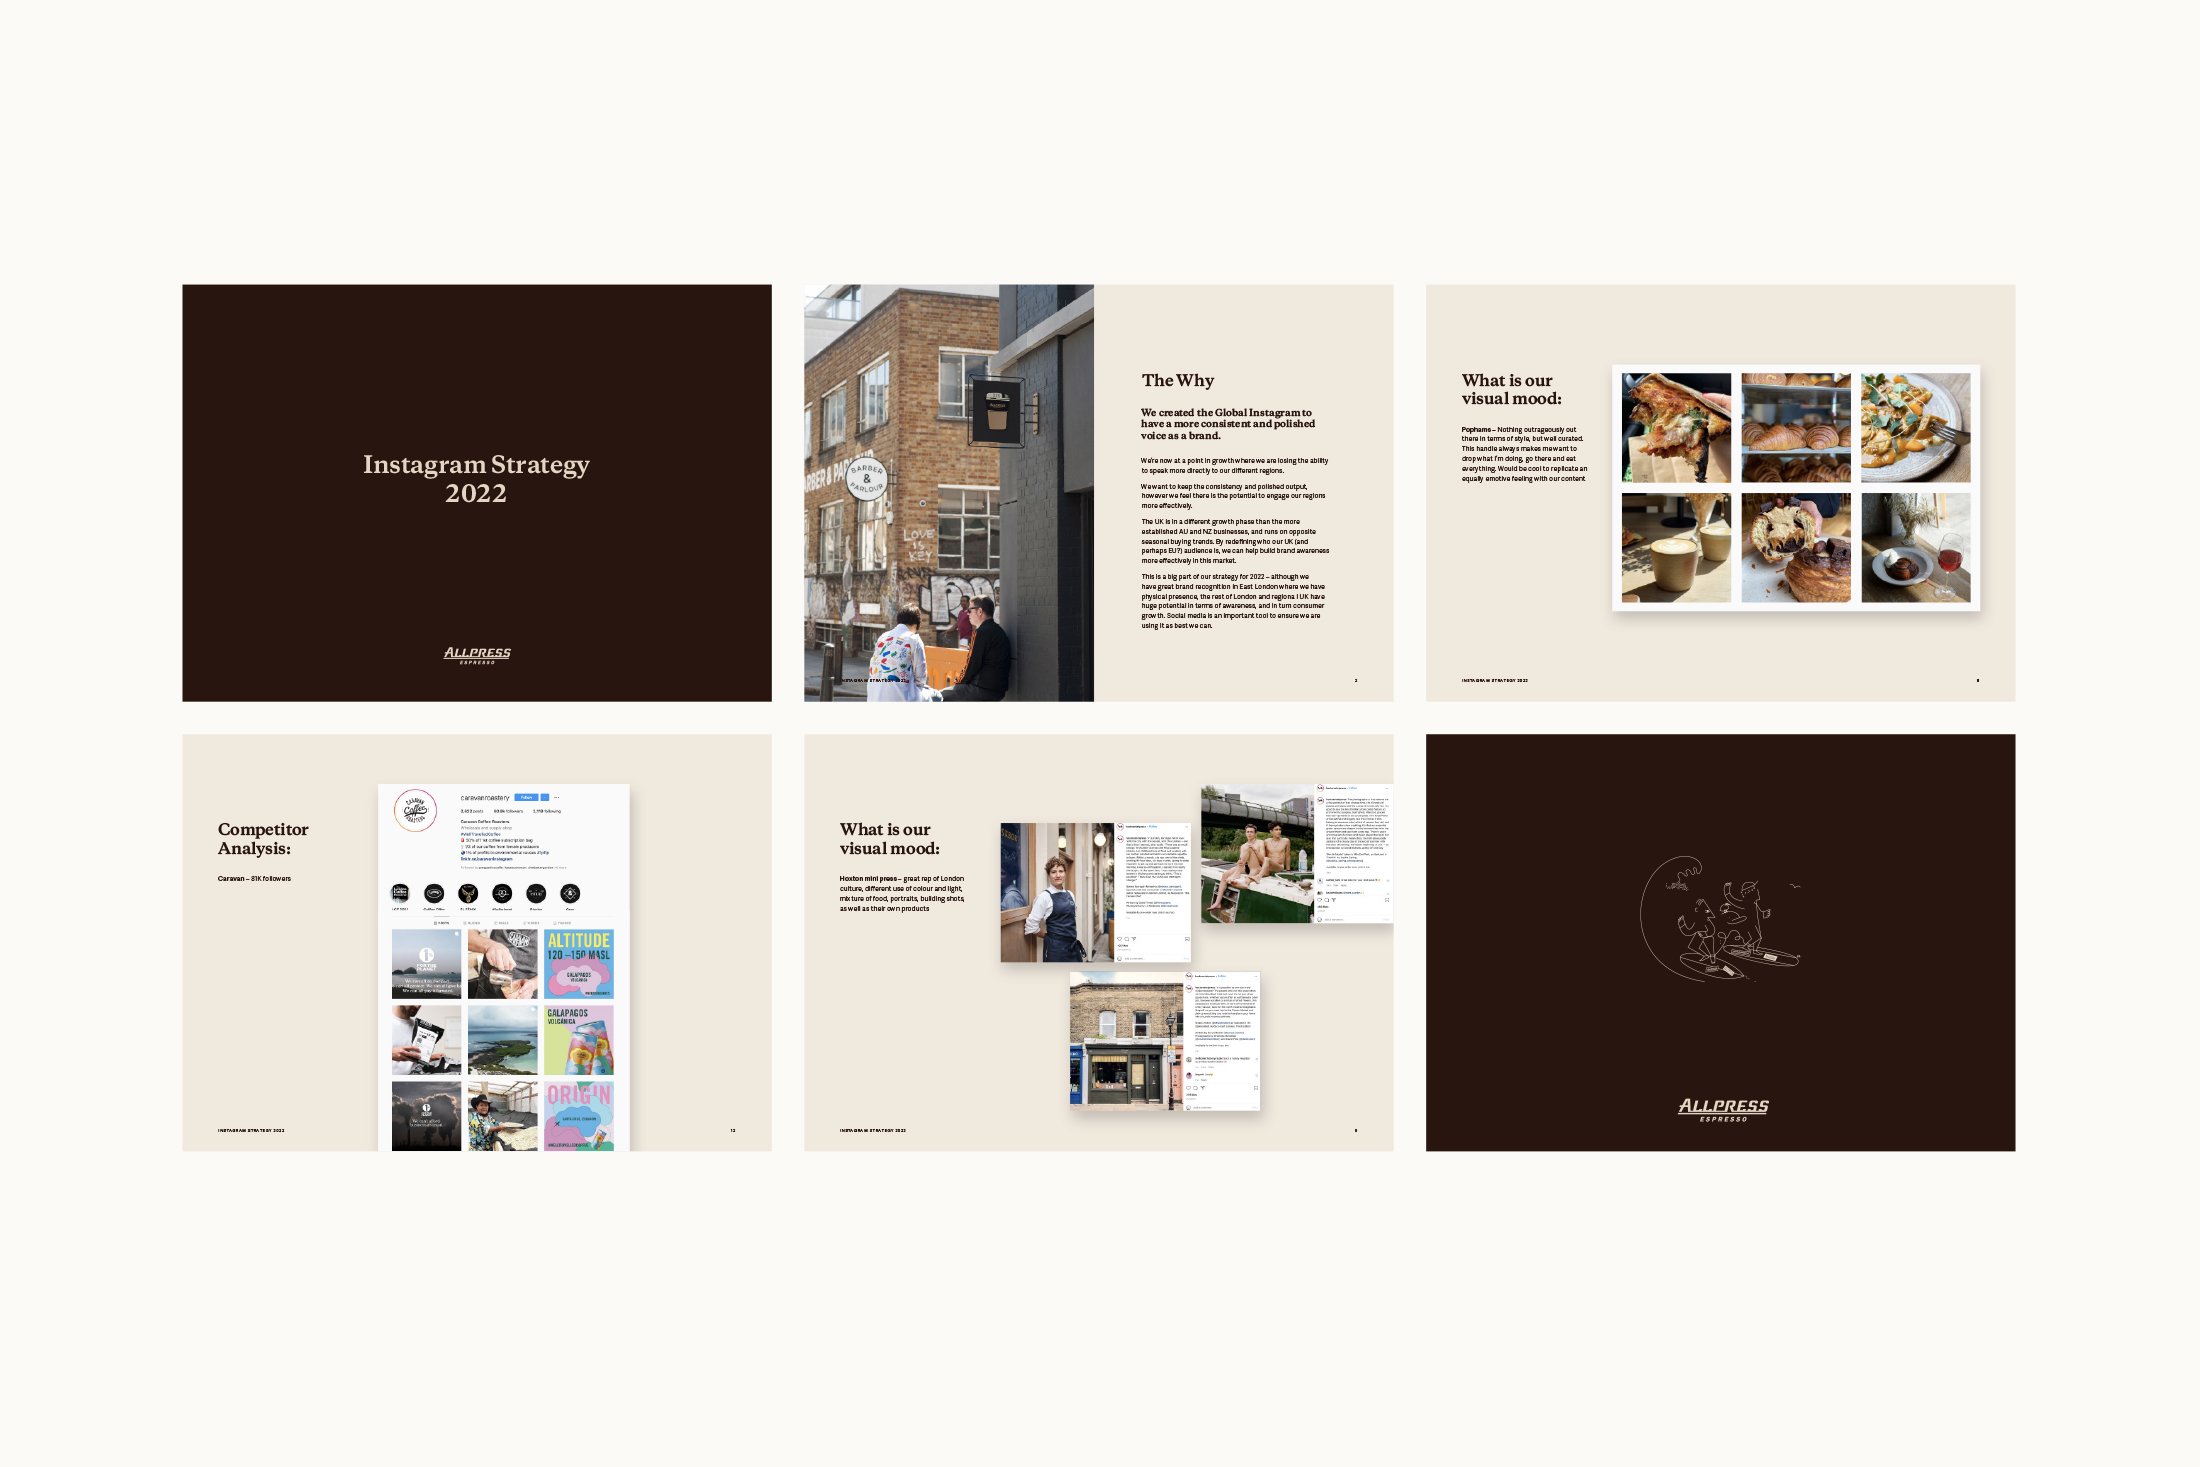  Allpress Espresso: PDF / powerpoint presentation. 